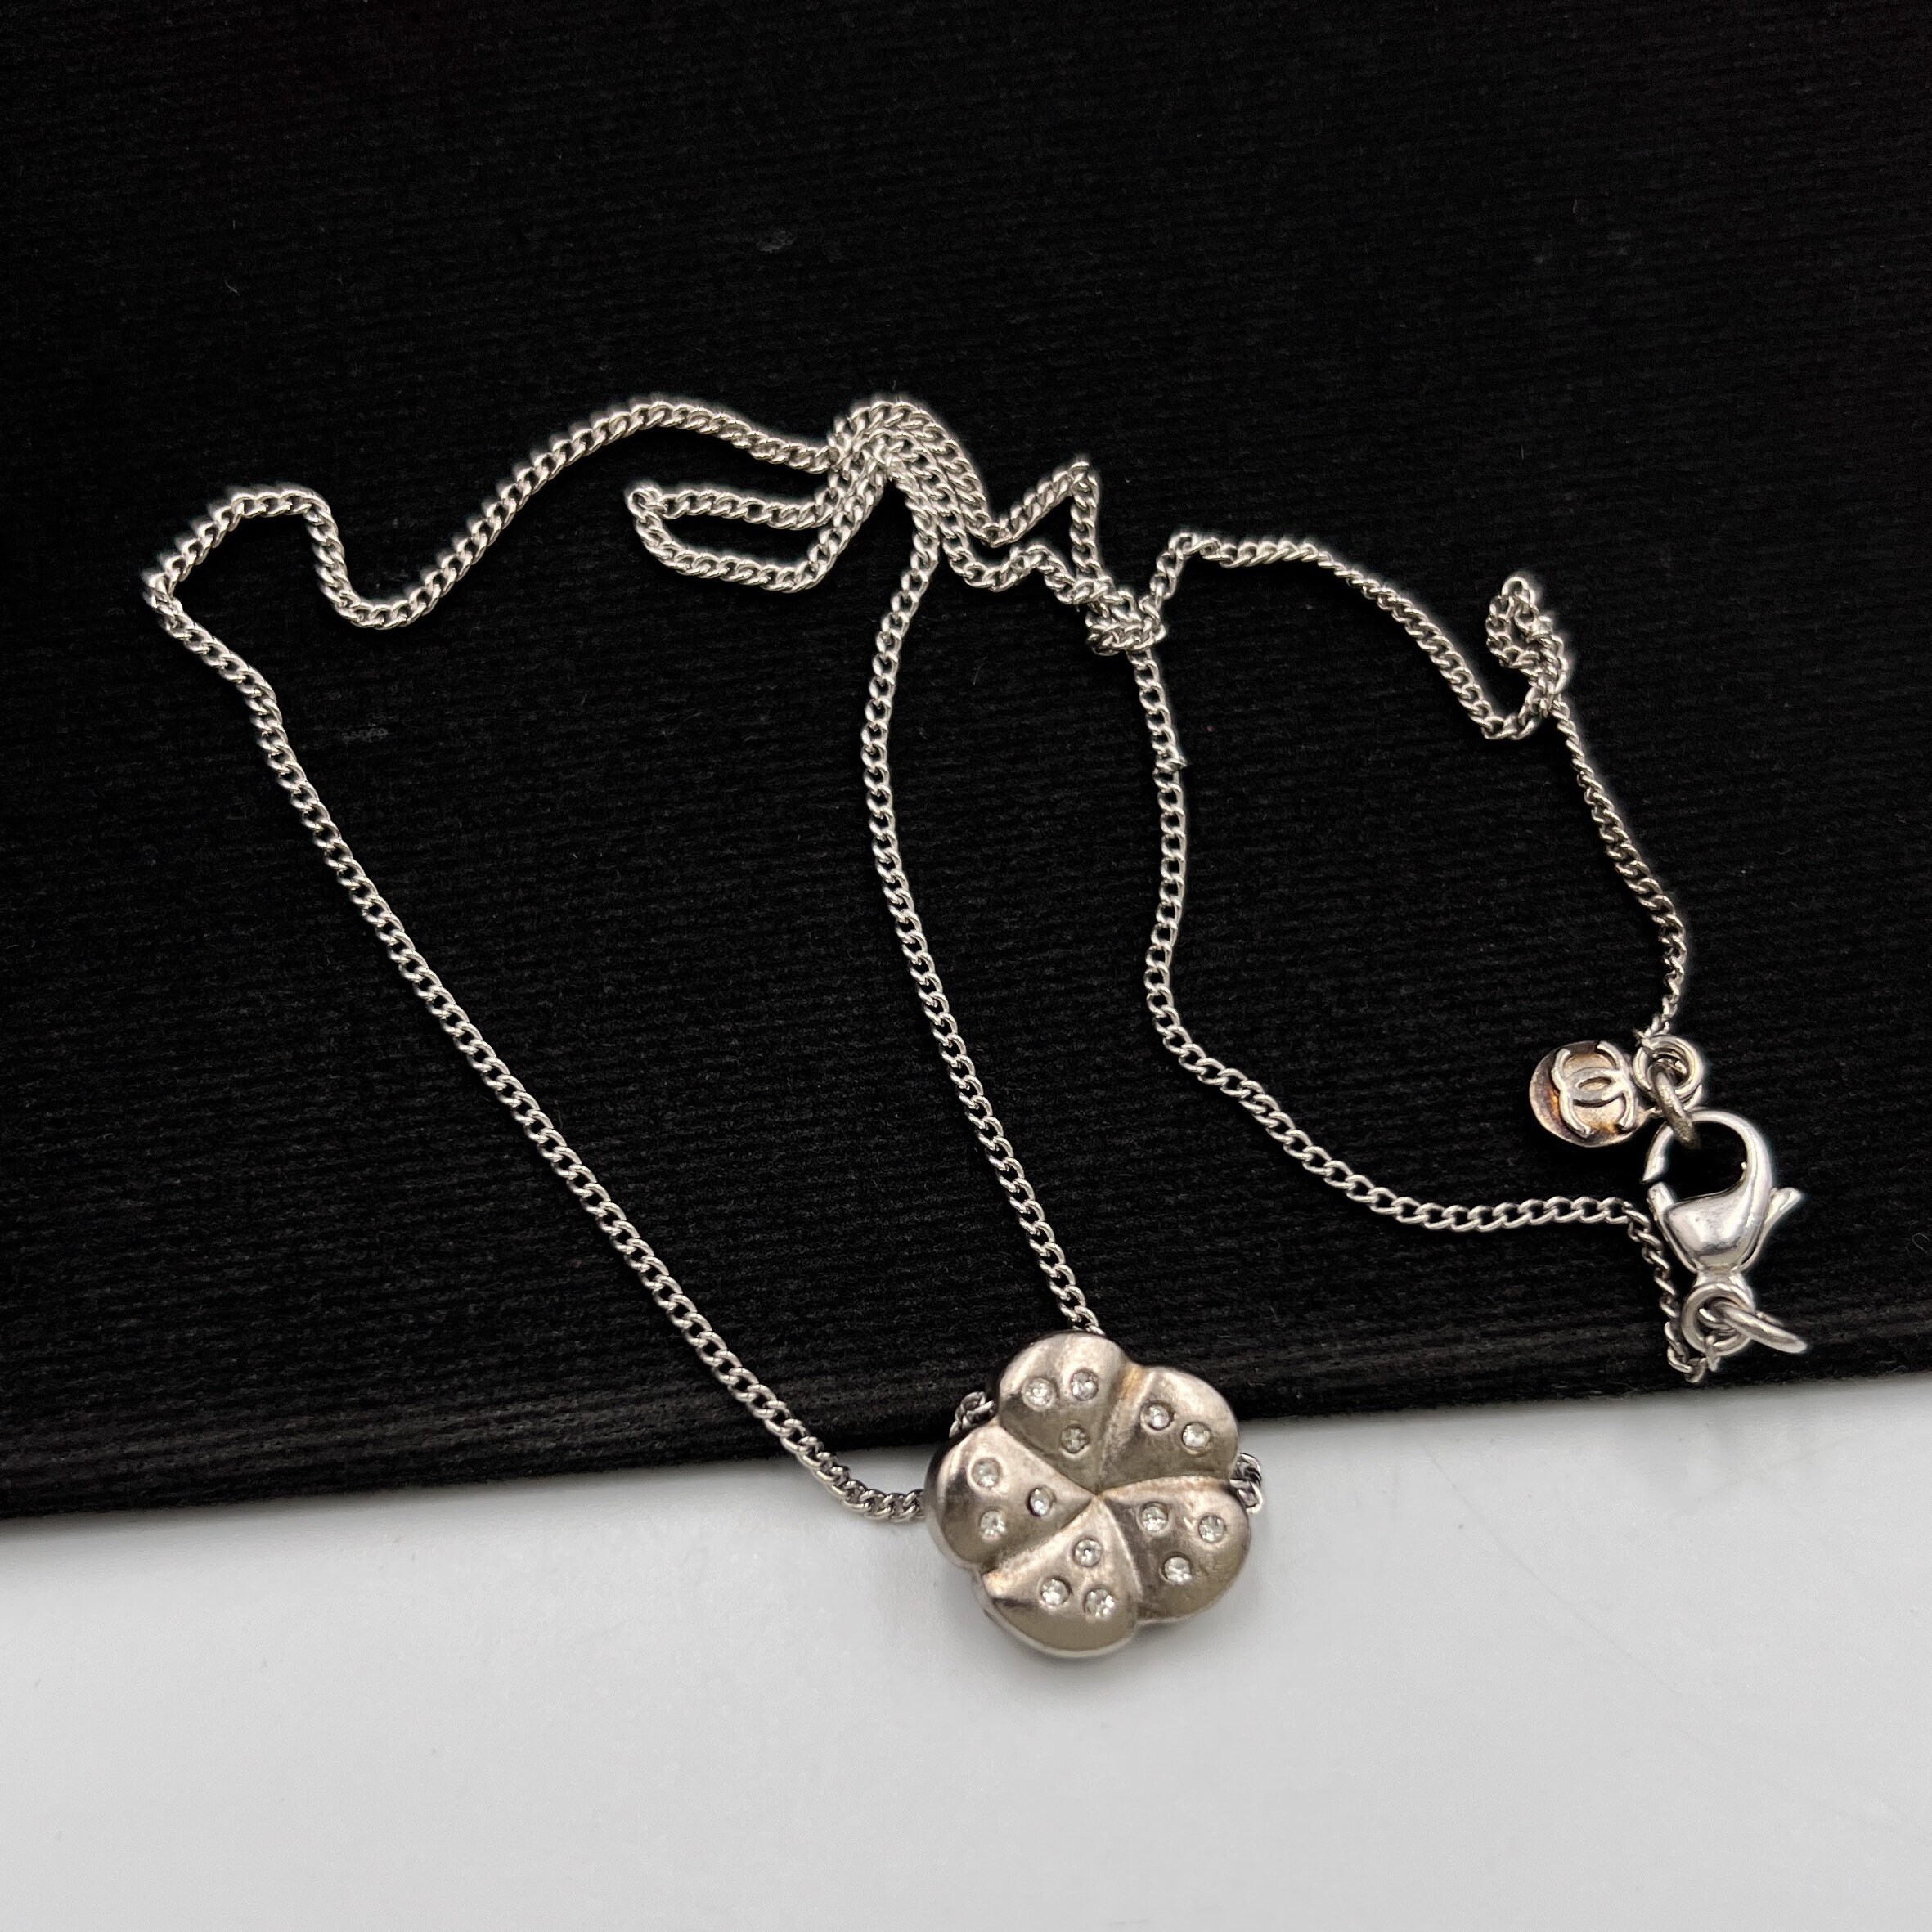 CHANEL Vintage Crystal Camellia Necklace 